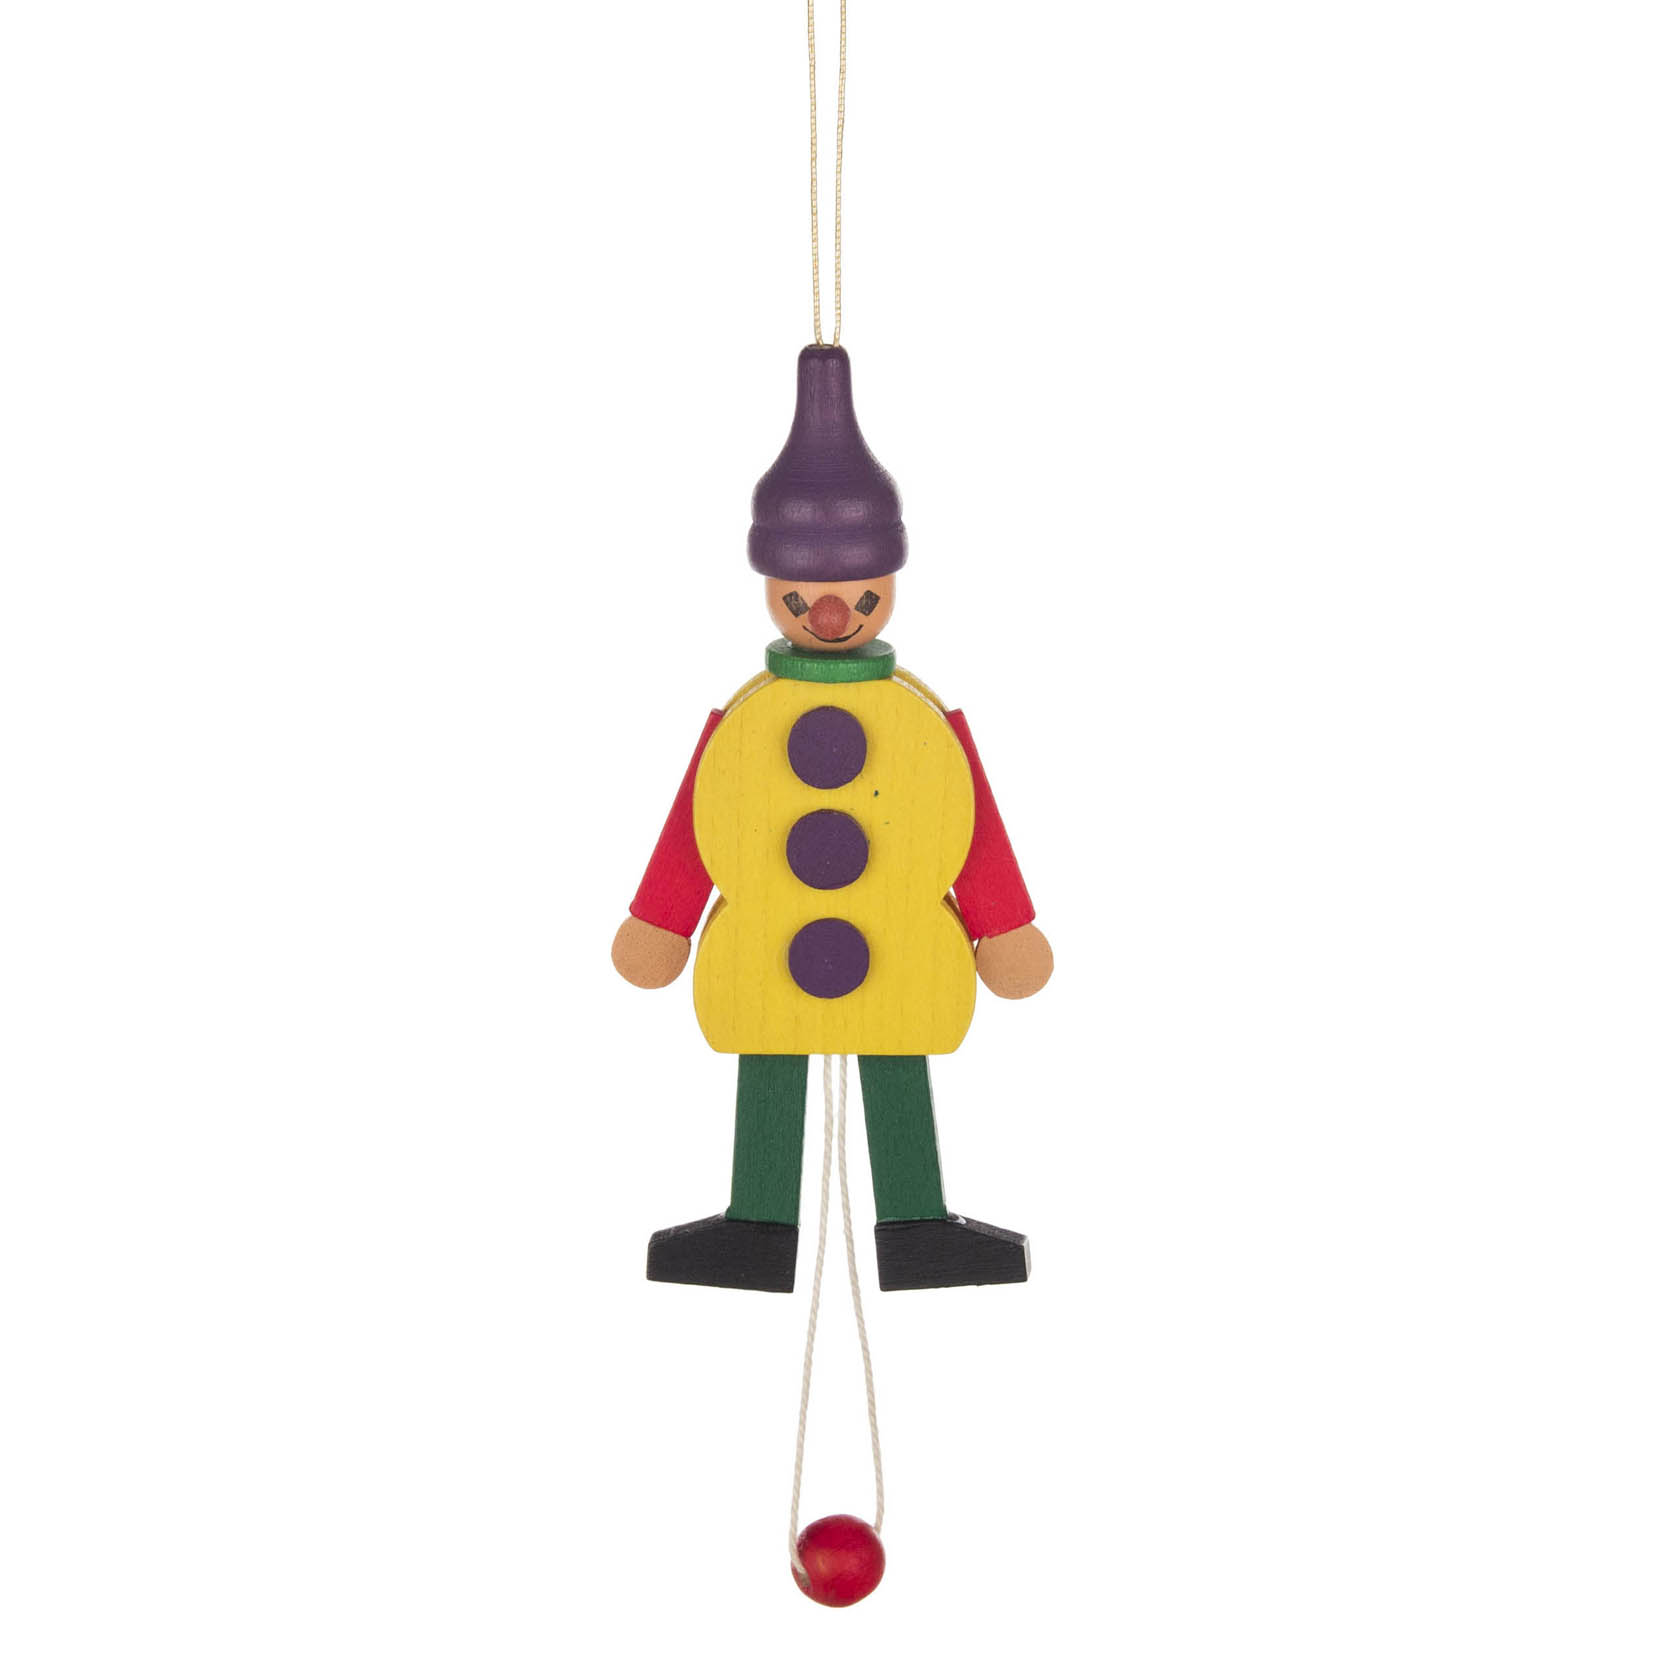 Behang Hampelmann Clown funktionsfähig -dregeno exclusiv-